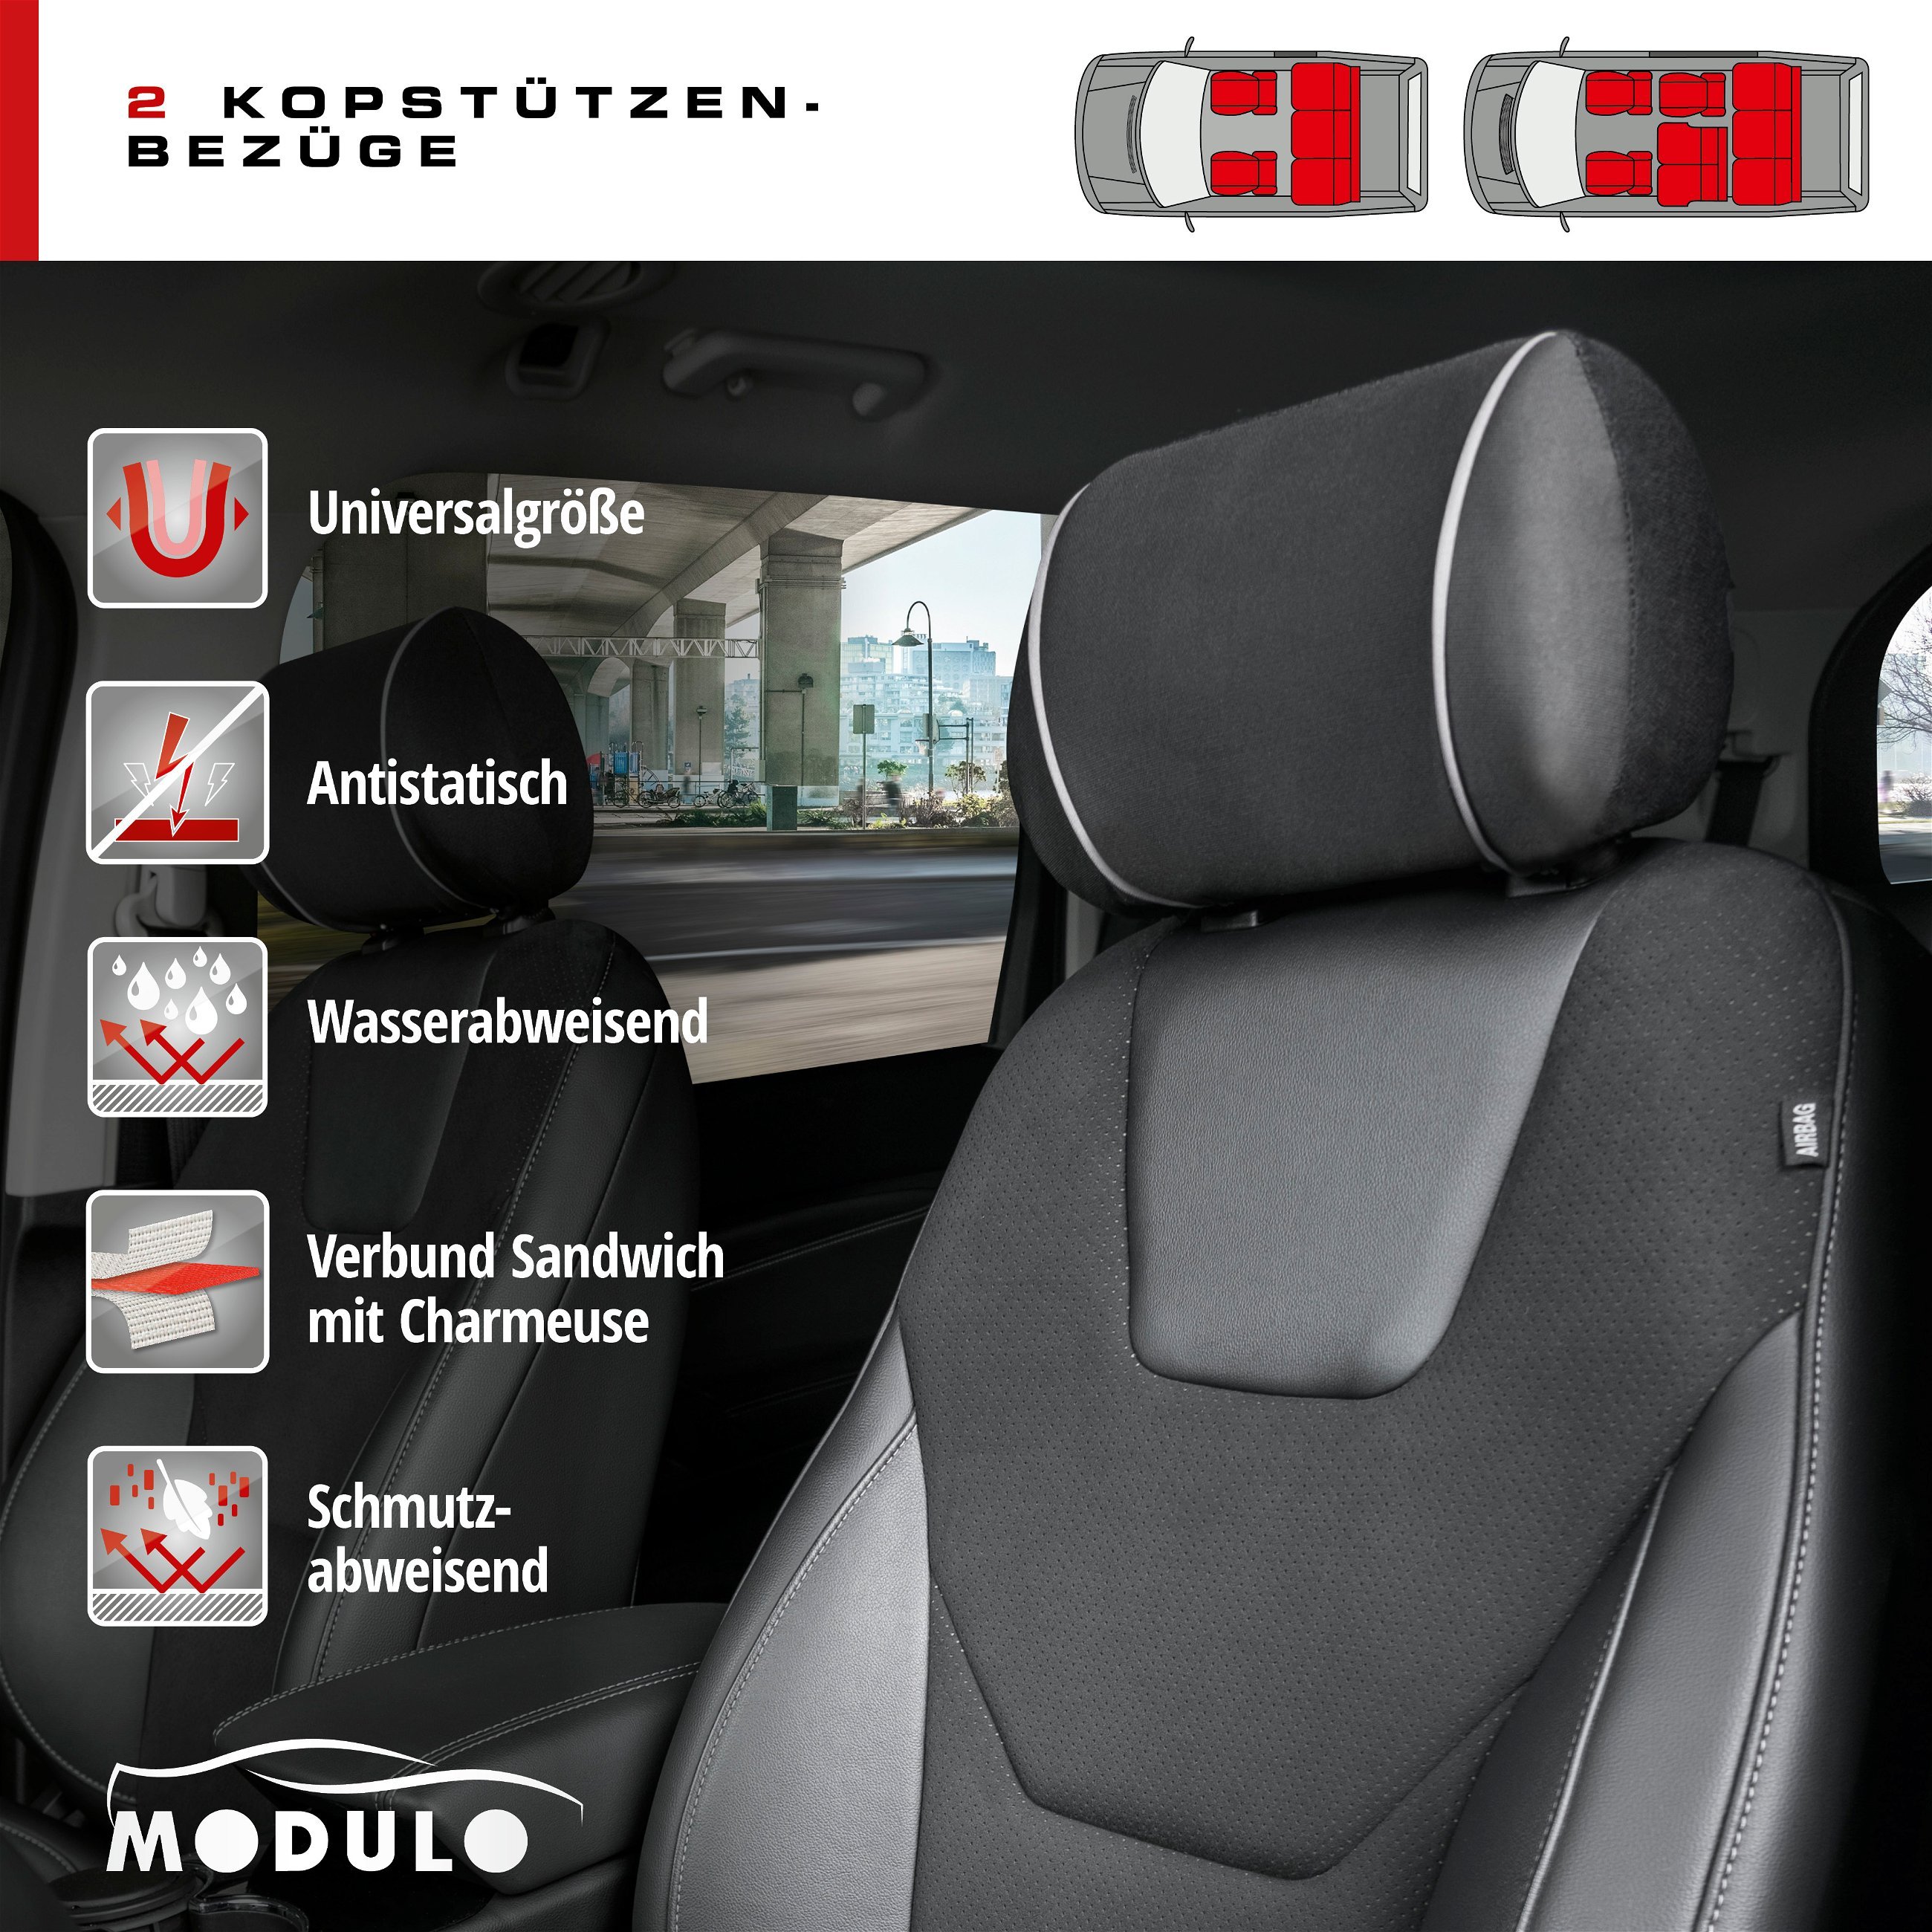 Pu Leder Autositz KopfstüTzenbezug Anti-Dirty Interior Decoration Styling Accessories für Opel Astra DGDD Auto KopfstüTzenschutz Fall 